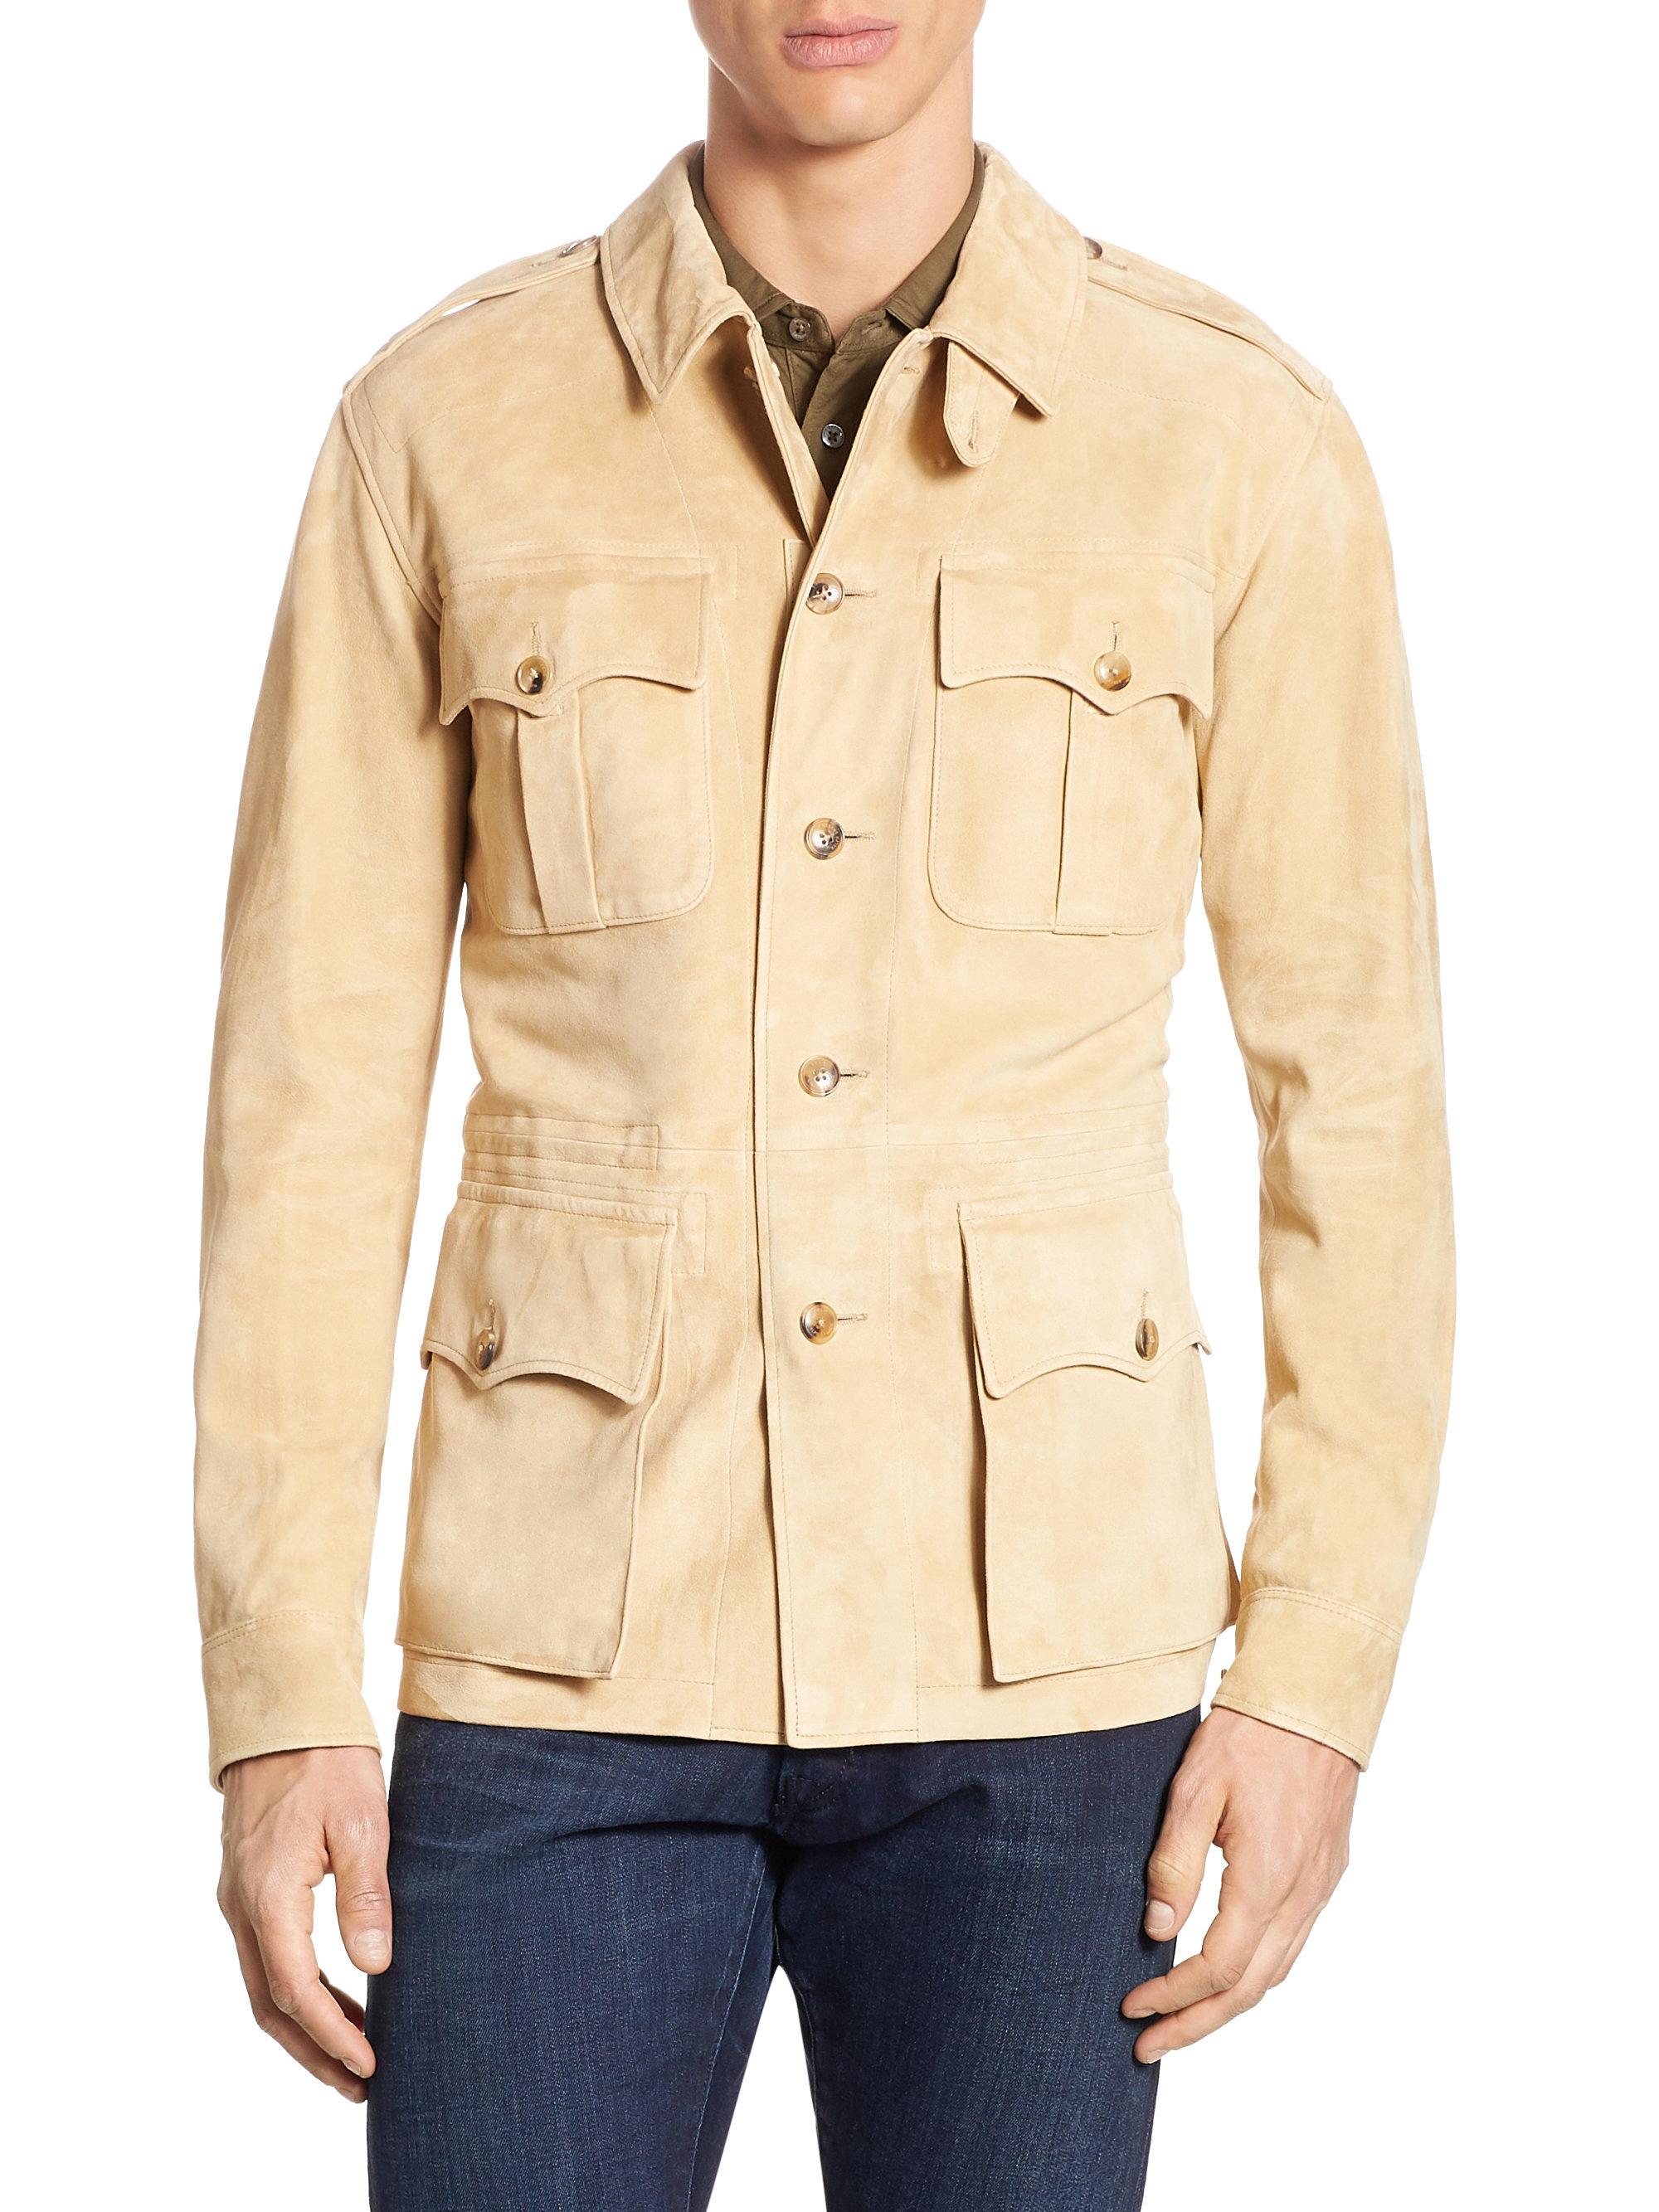 safari jacket for sale mens